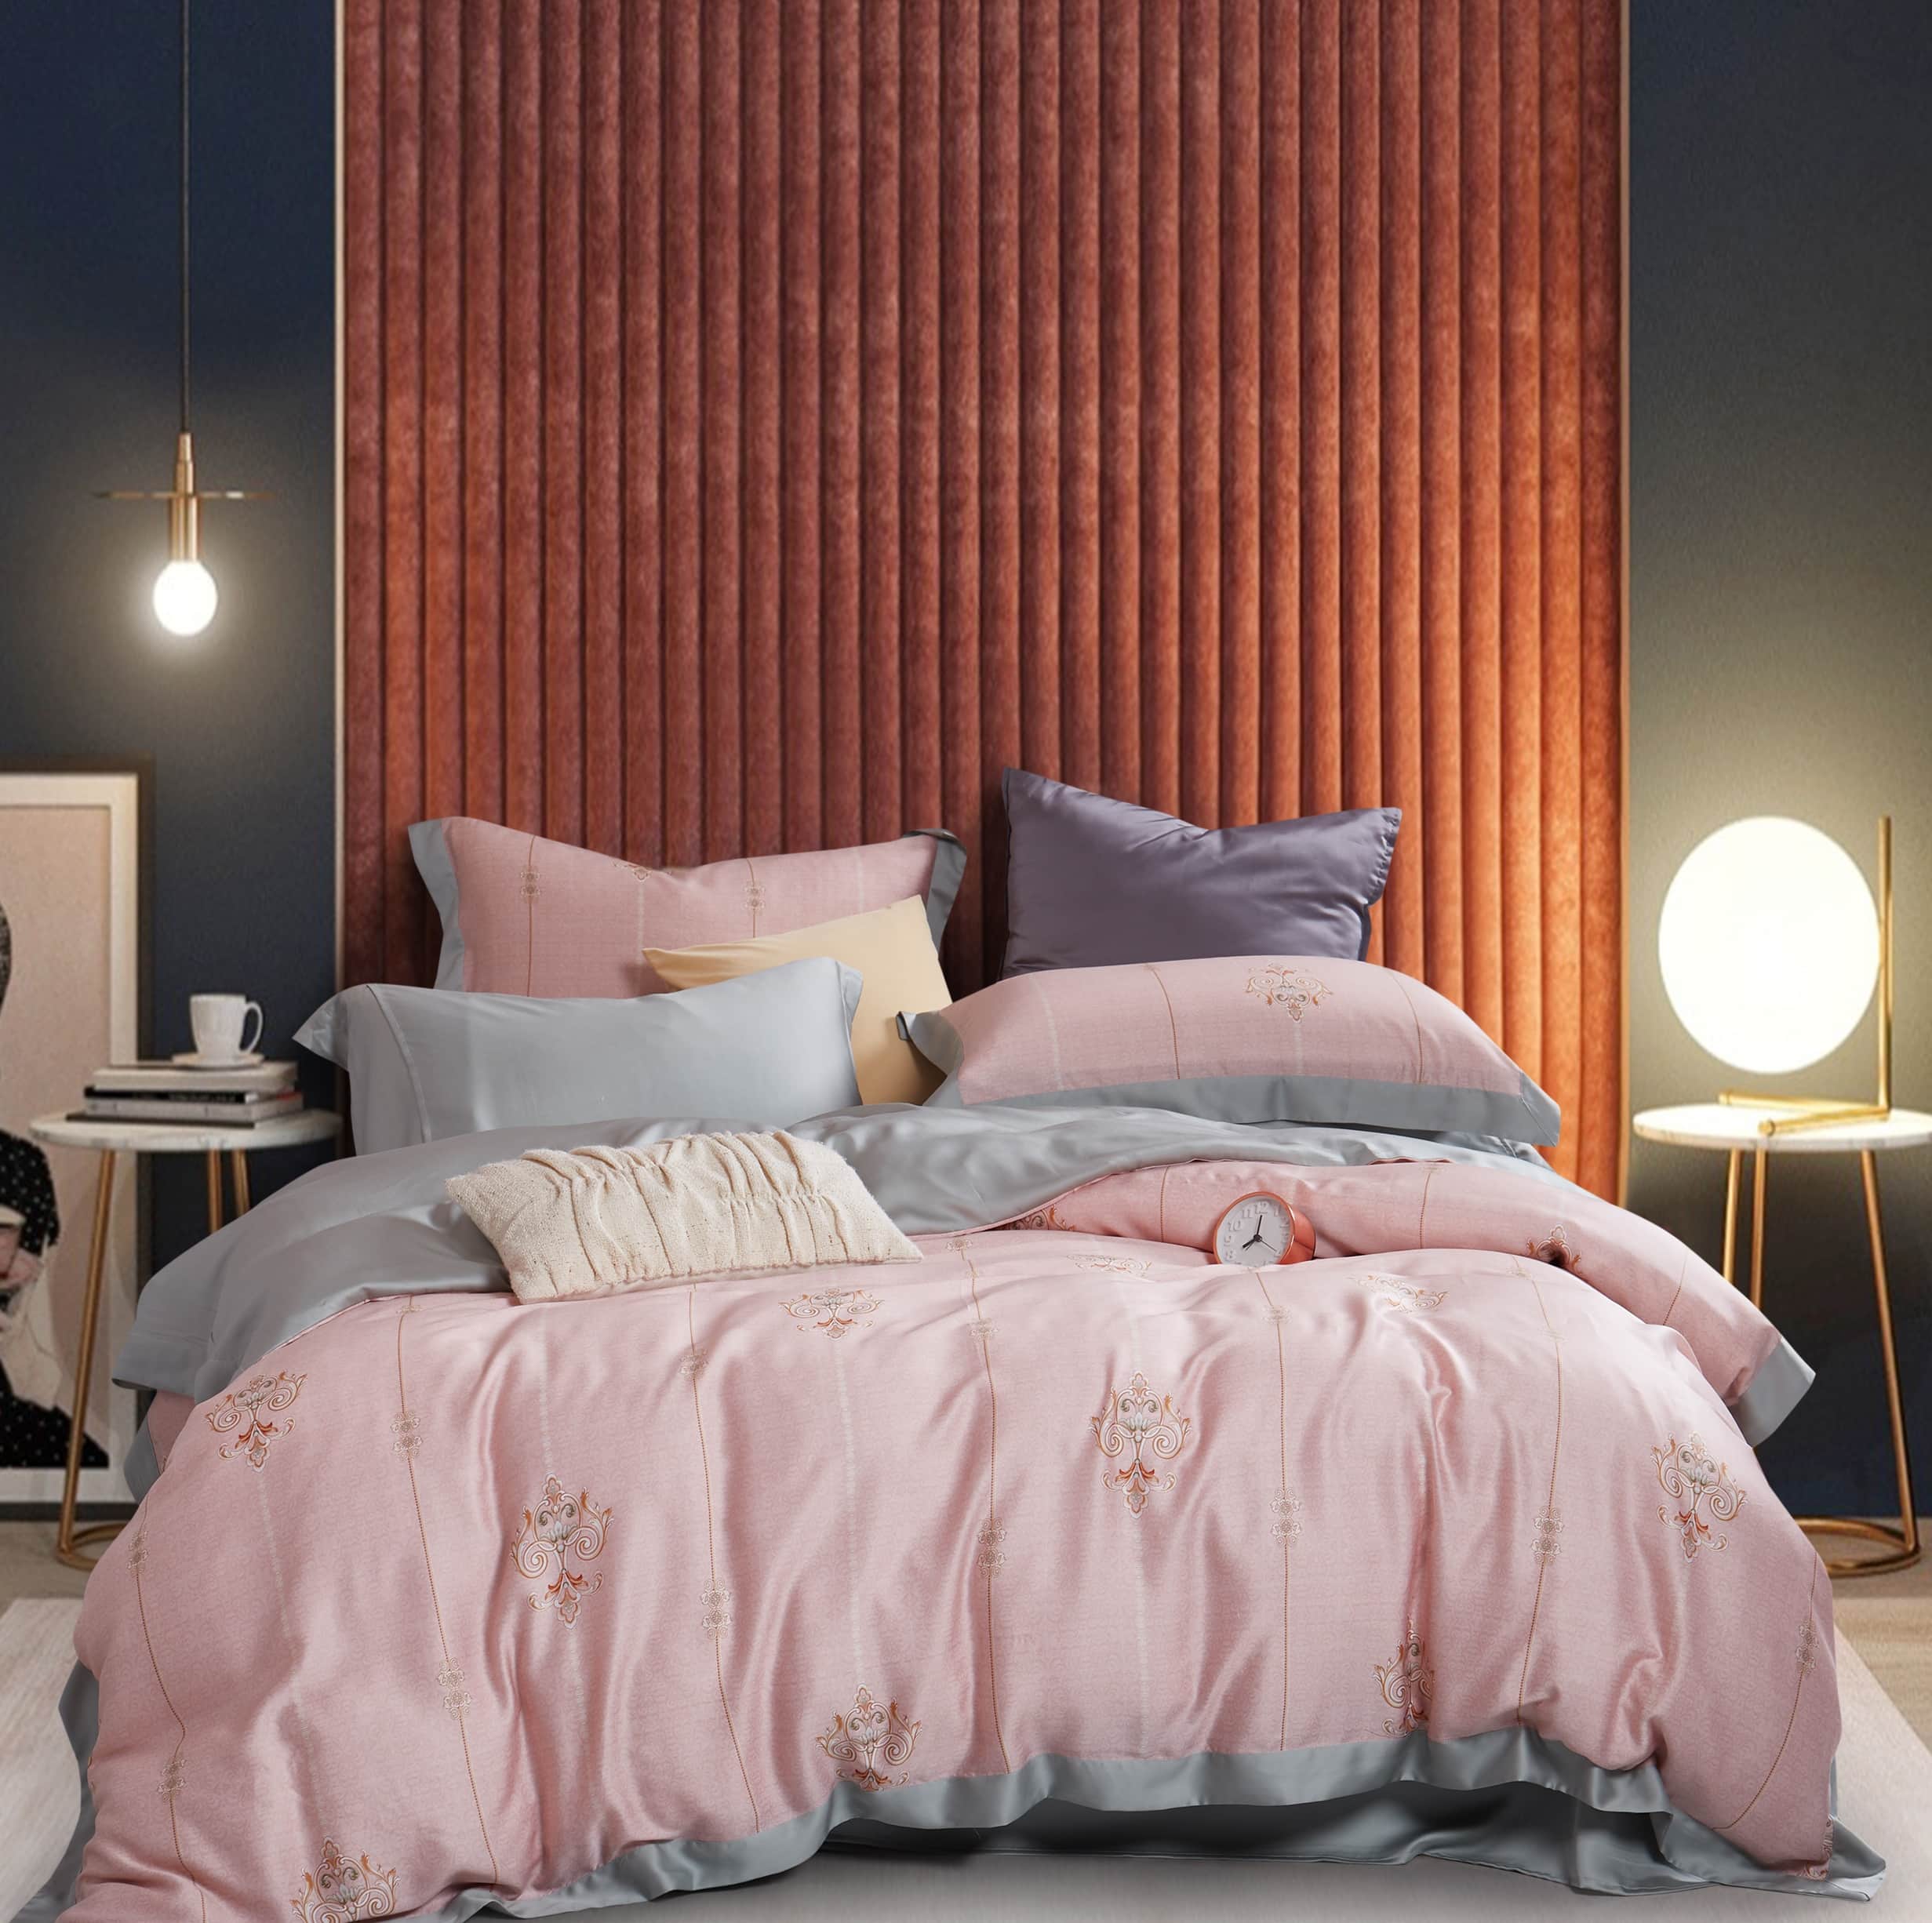 Home textile luxury duvet cover tencel bed spreads hotel linen sheet bedding set